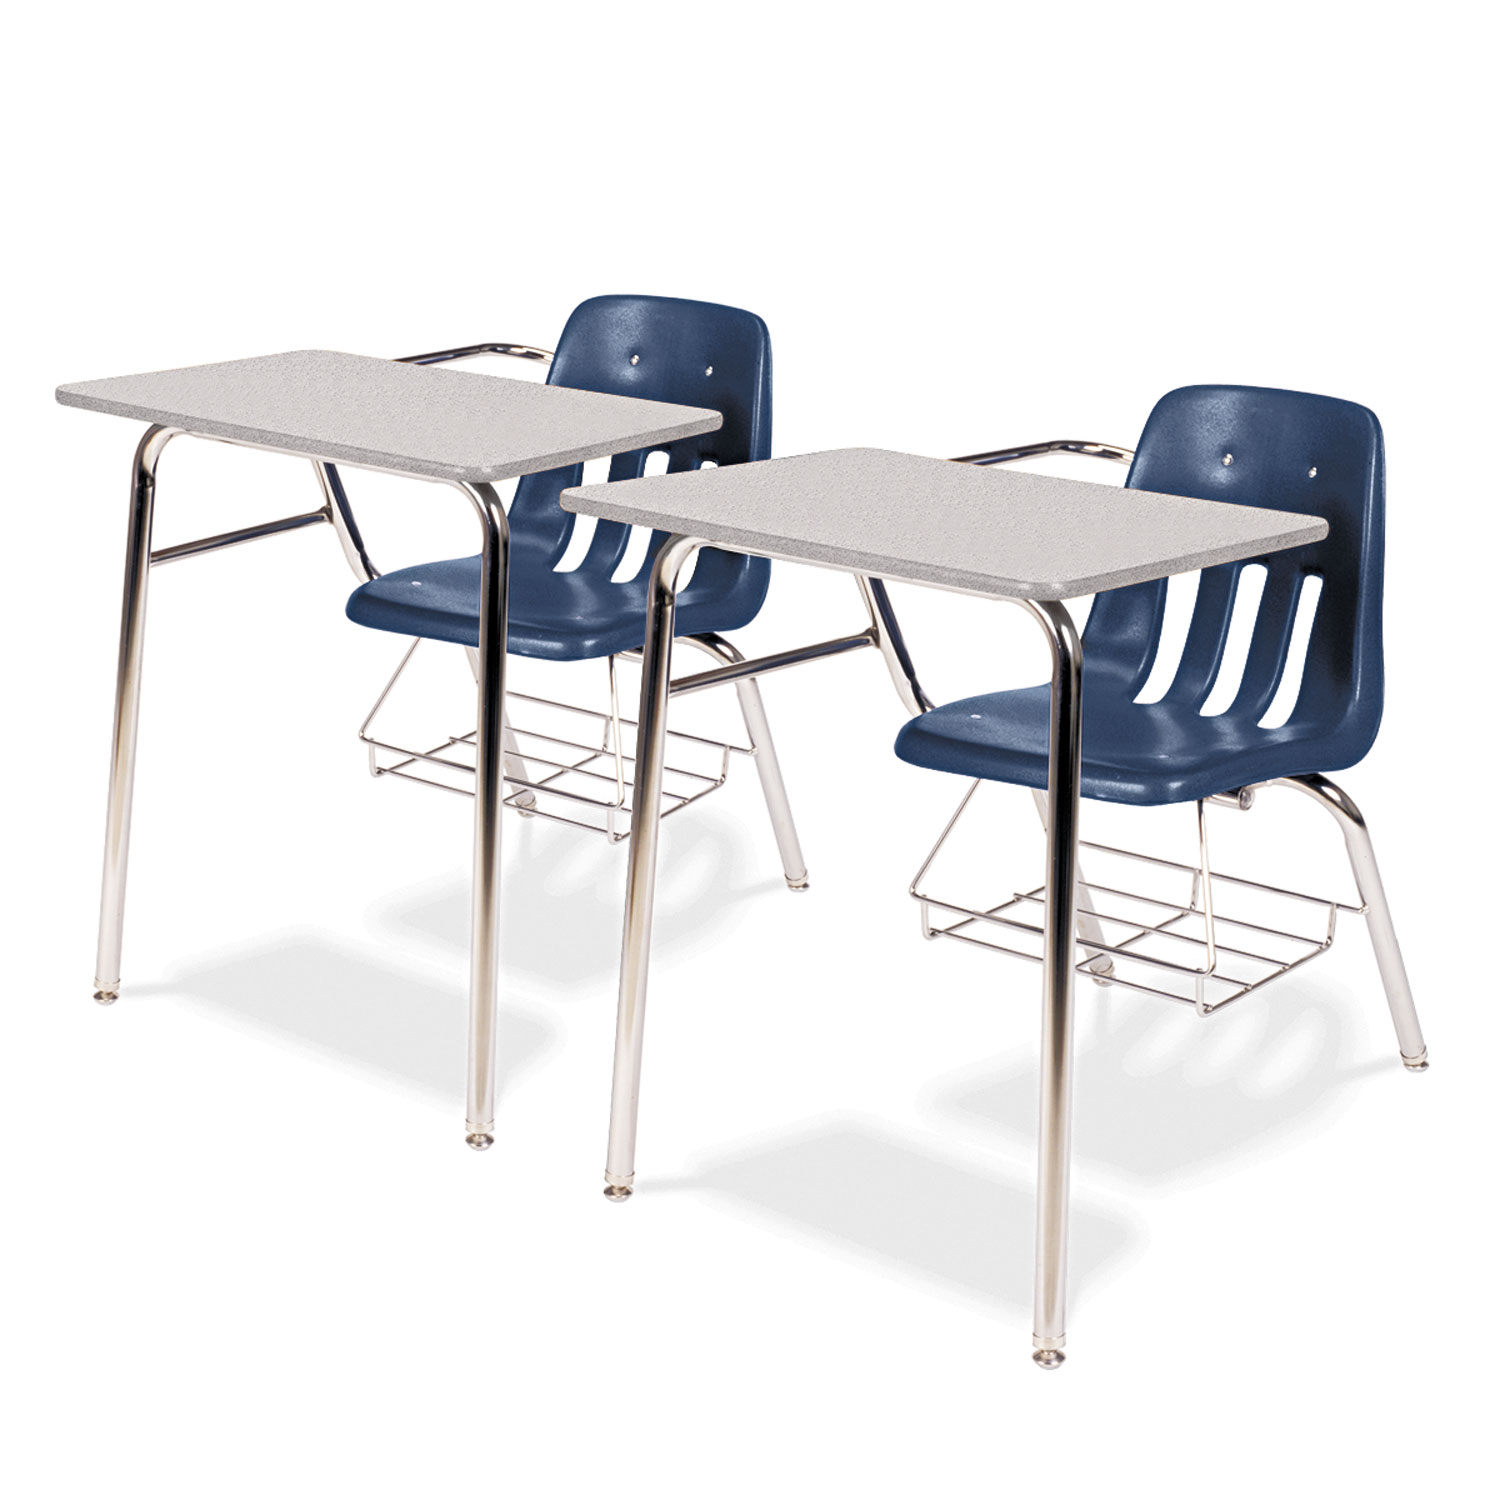 9400 Series Chair Desk, 21w x 33-1/2d x 30h, Gray Nebula/Navy, 2/Carton